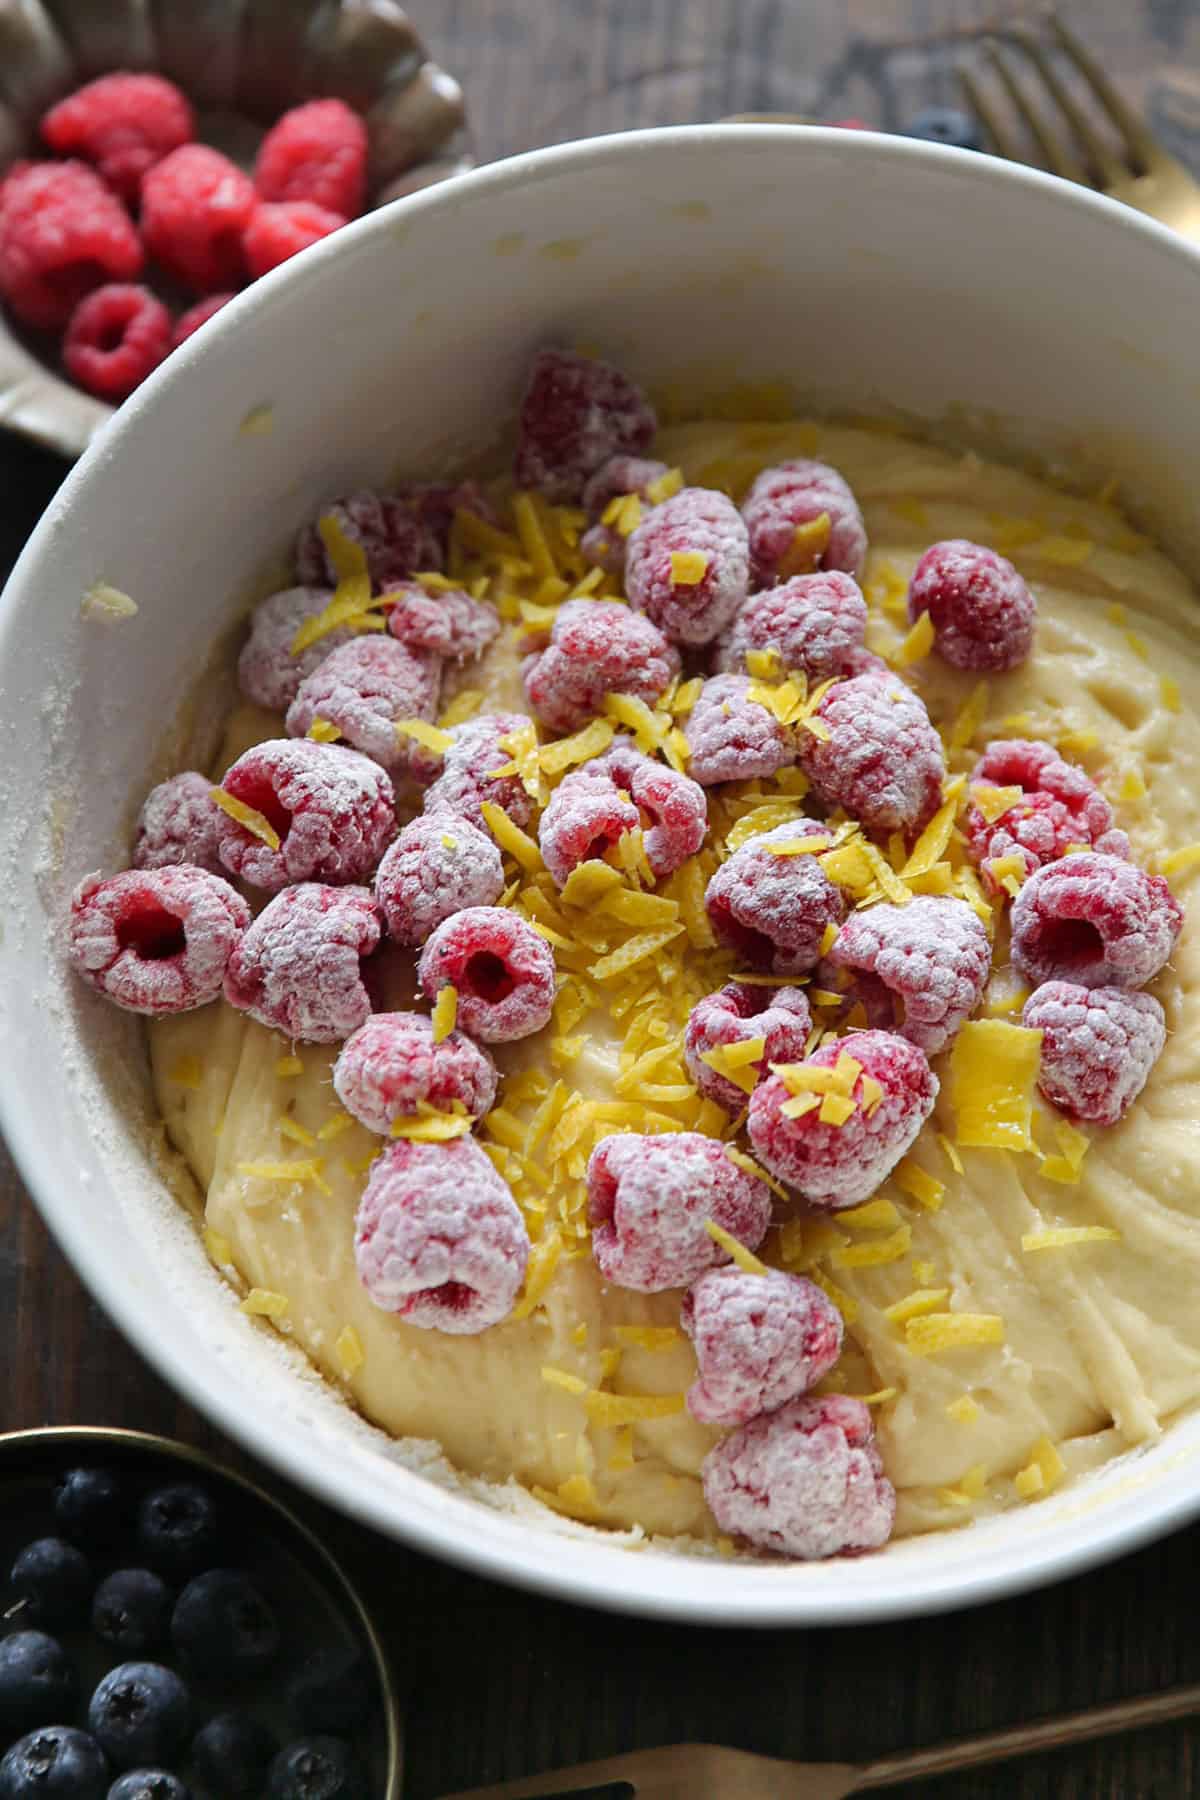 flour coated raspberries, lemon zest, and cake batter in a bowl.